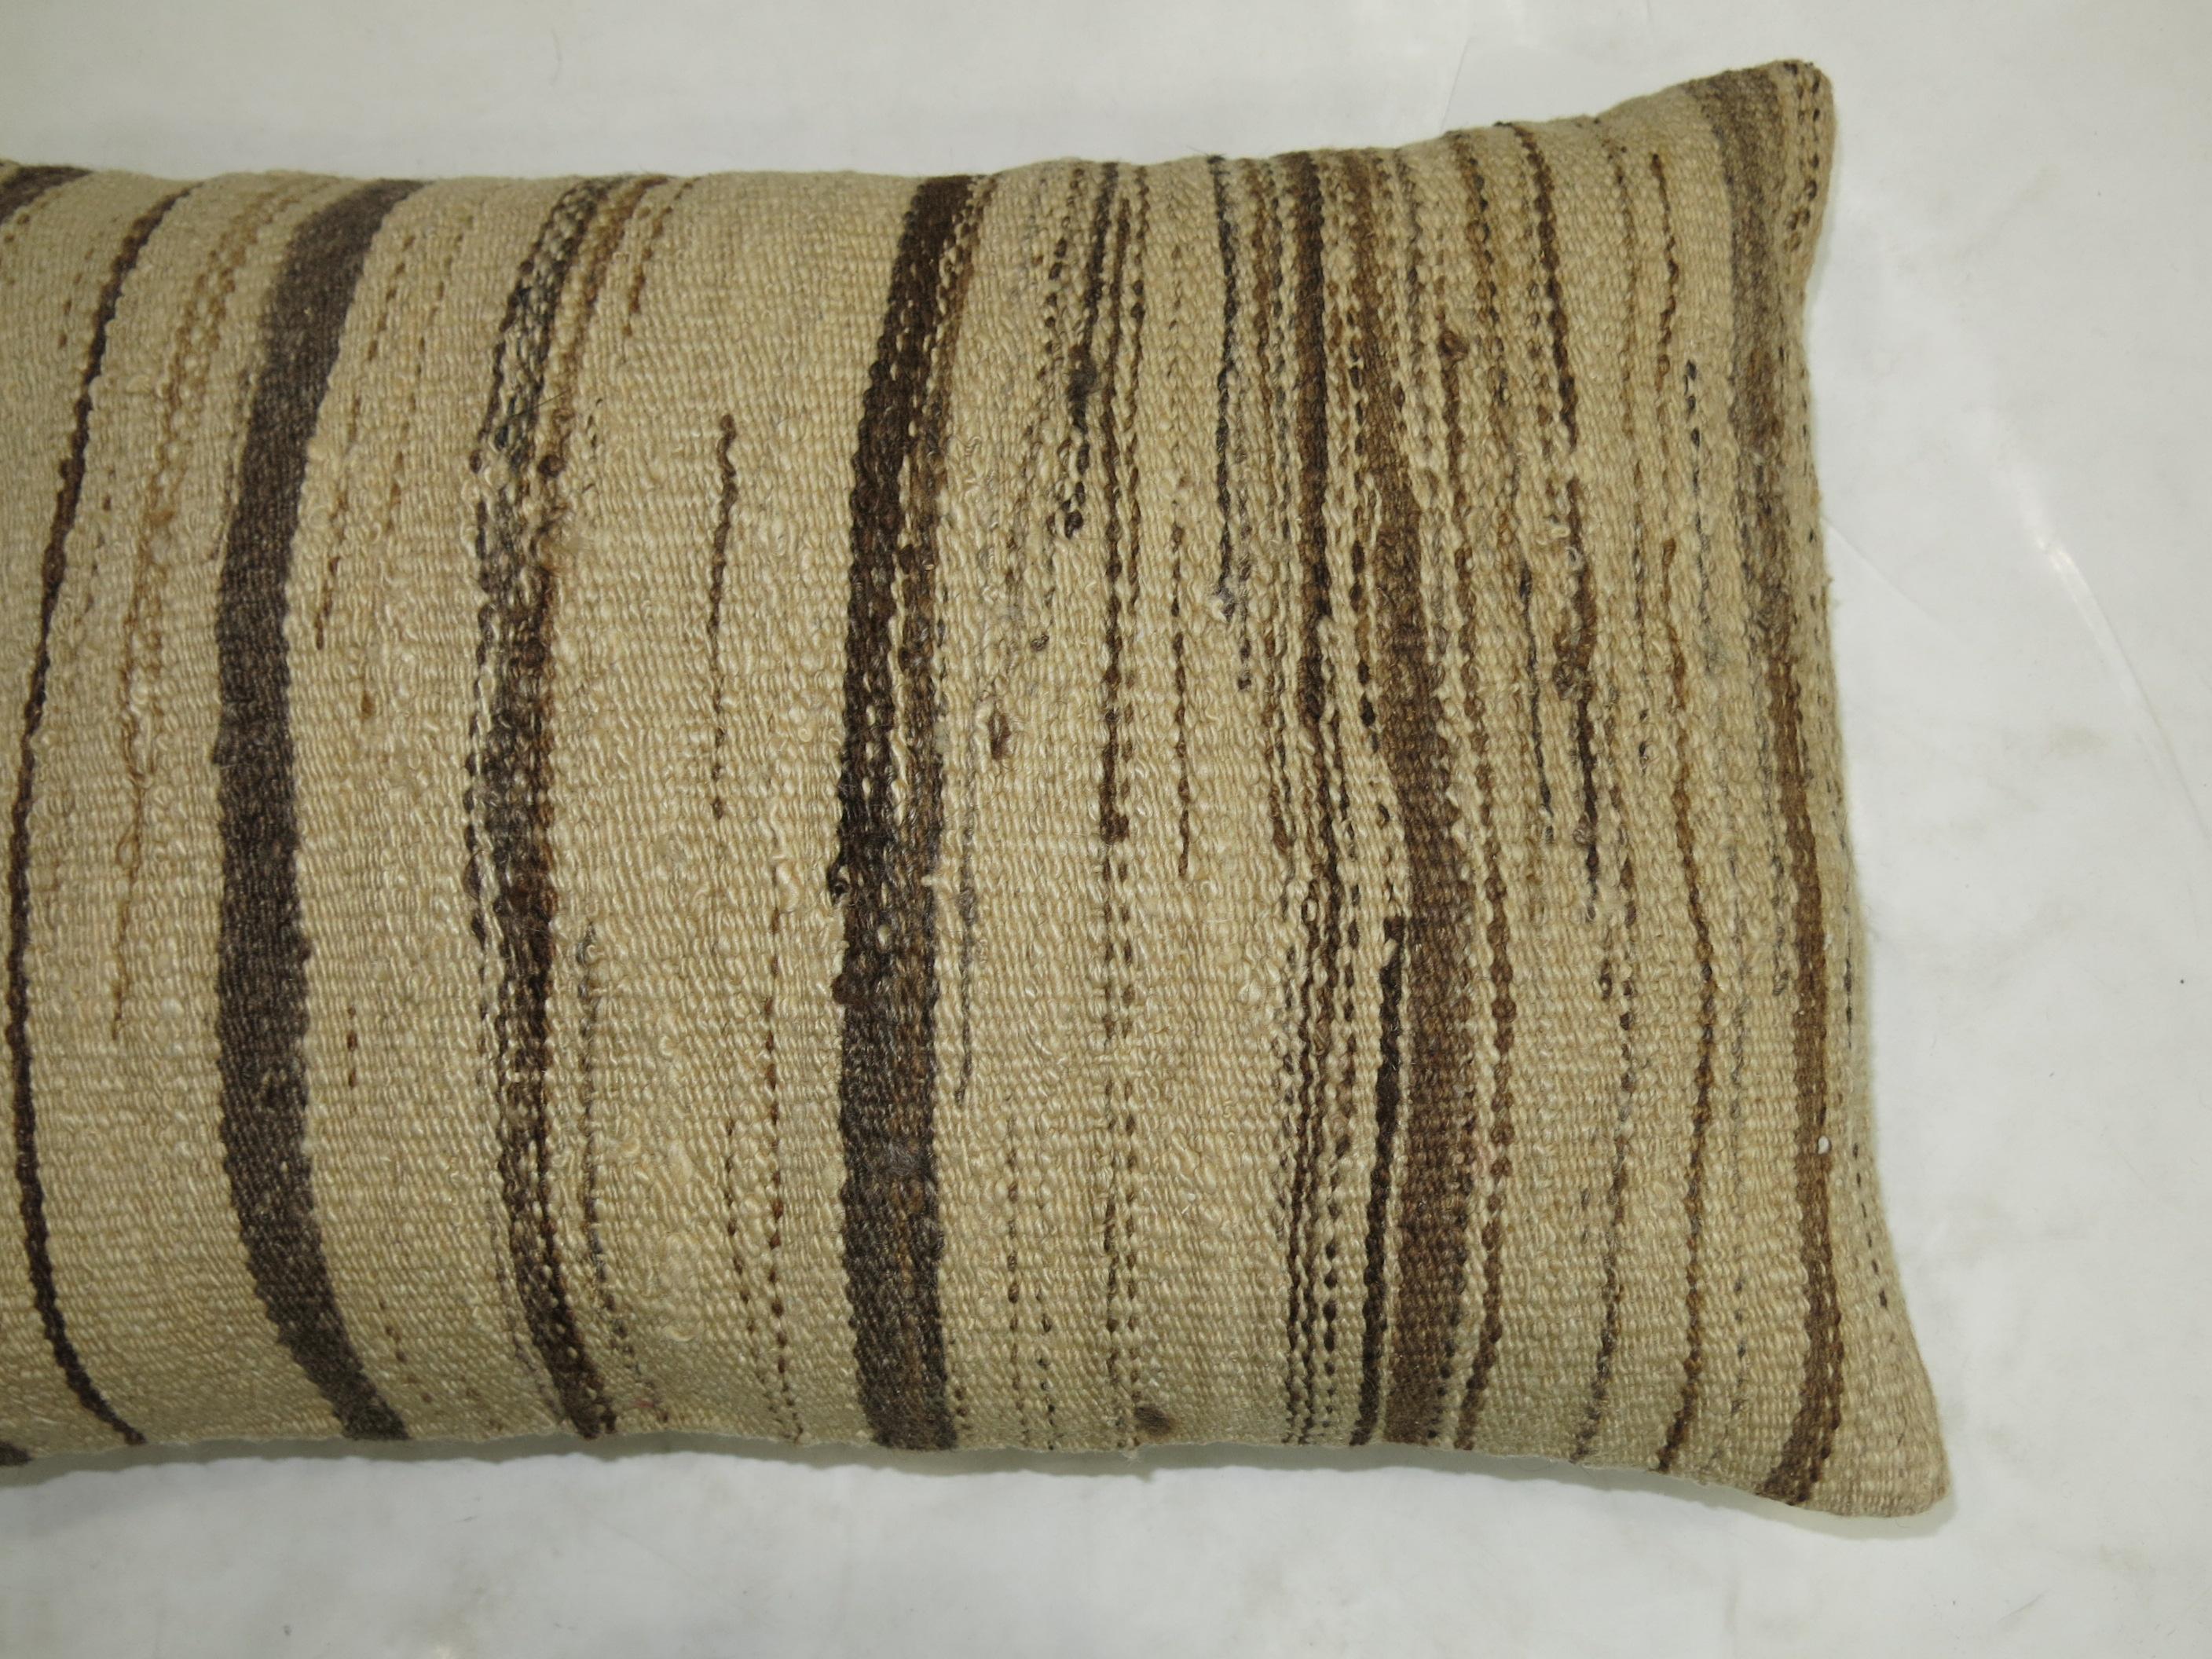 Pillow made from modern Turkish Kilim.

16'' x 24''